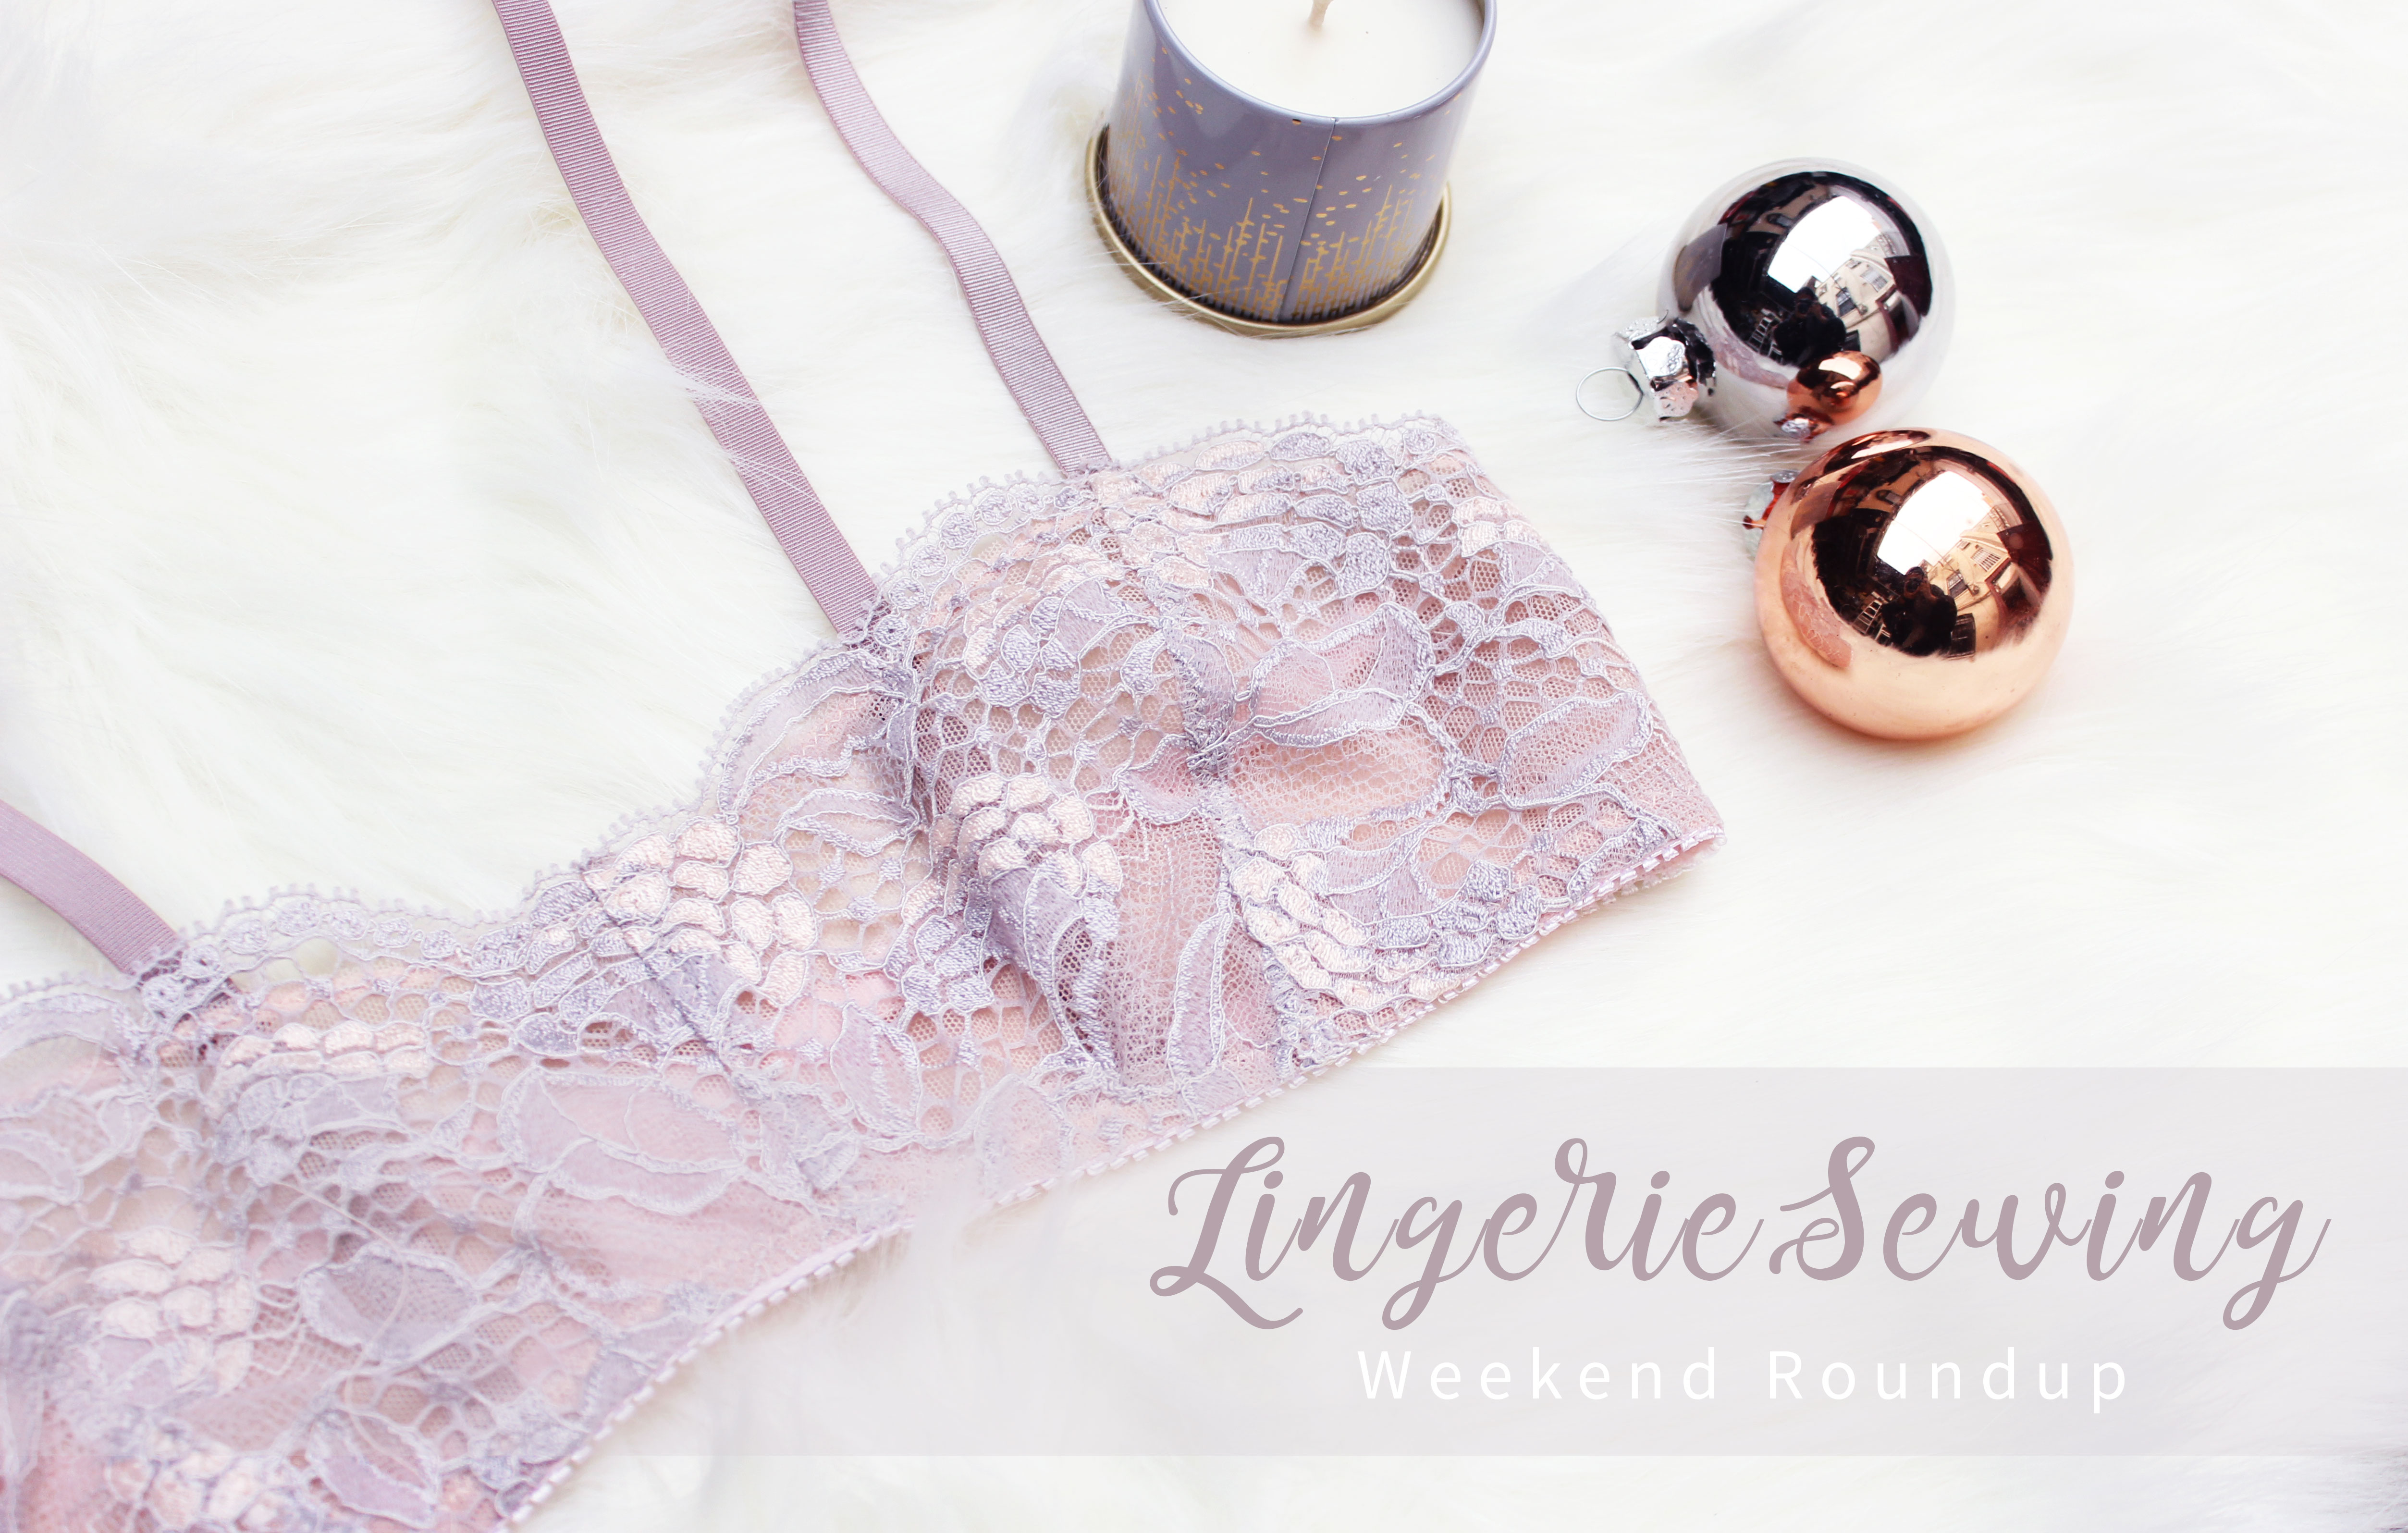 Lingerie Sewing Making Weekend Round Up Tailor Made Shop Bra Making Underwear Making